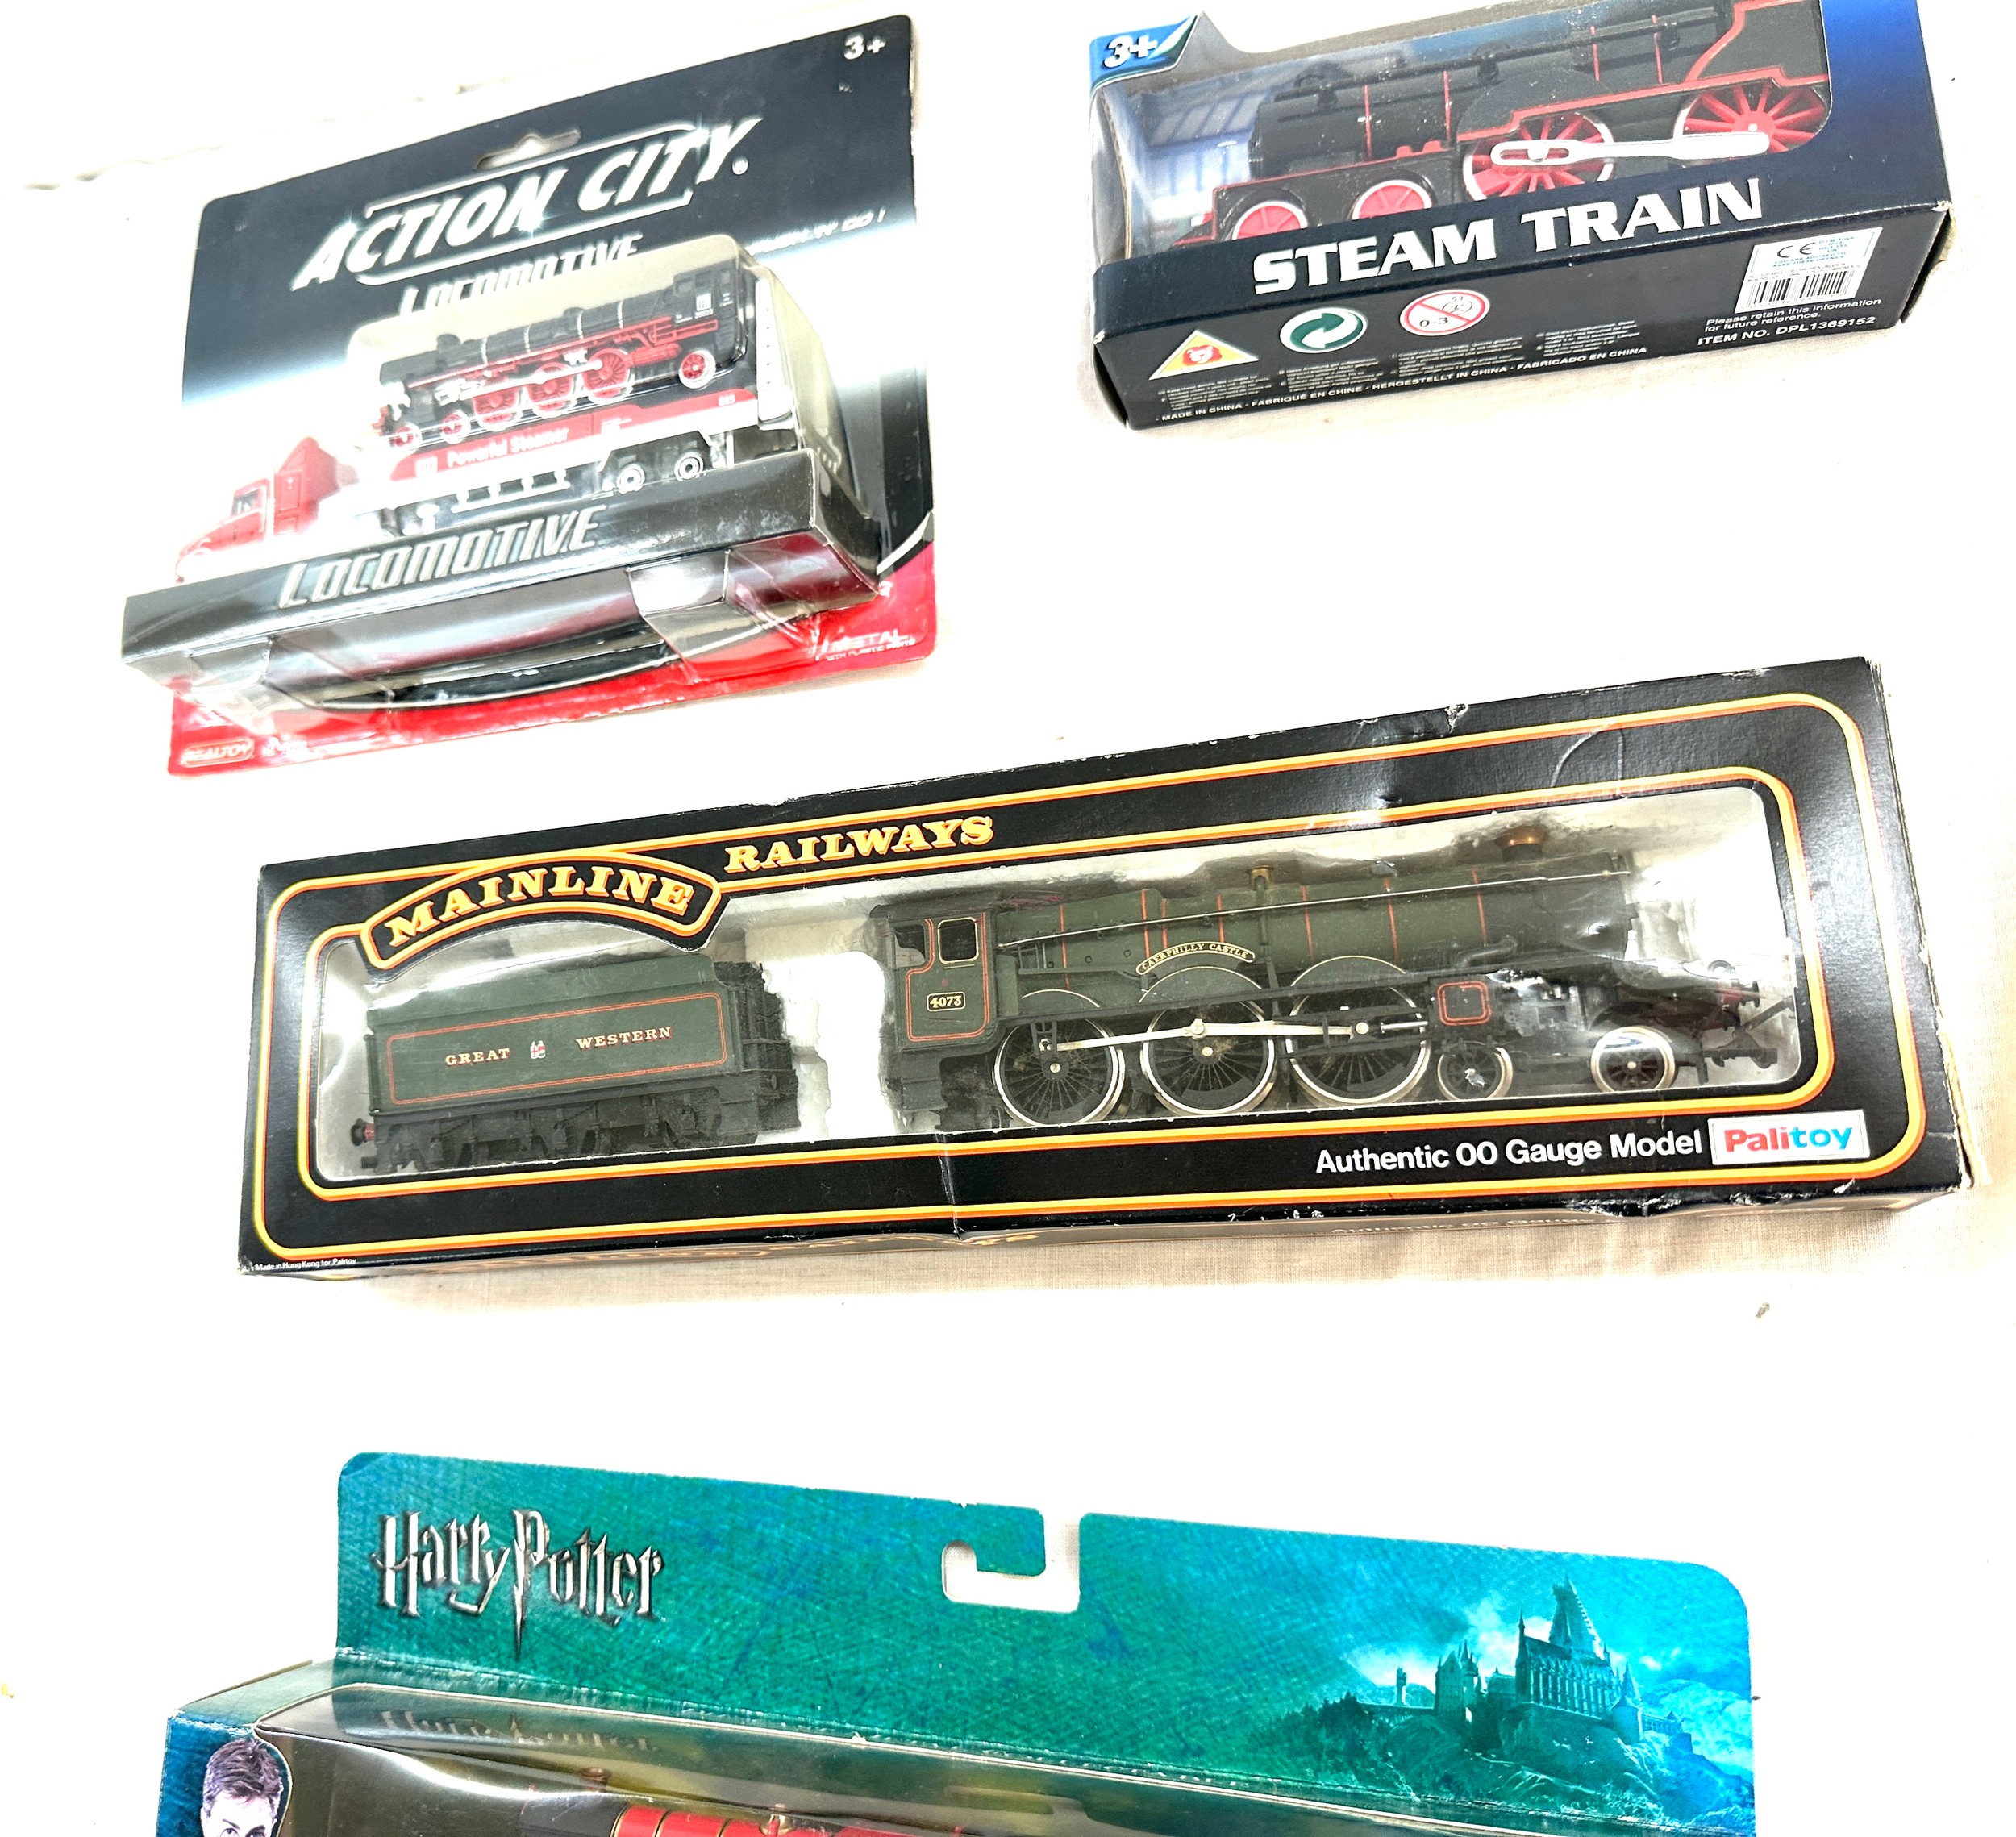 Corgi Boxed Harry Potter die cast Hogwarts Express, Mainline 00 gauge model locomotive, Steam train, - Image 7 of 9